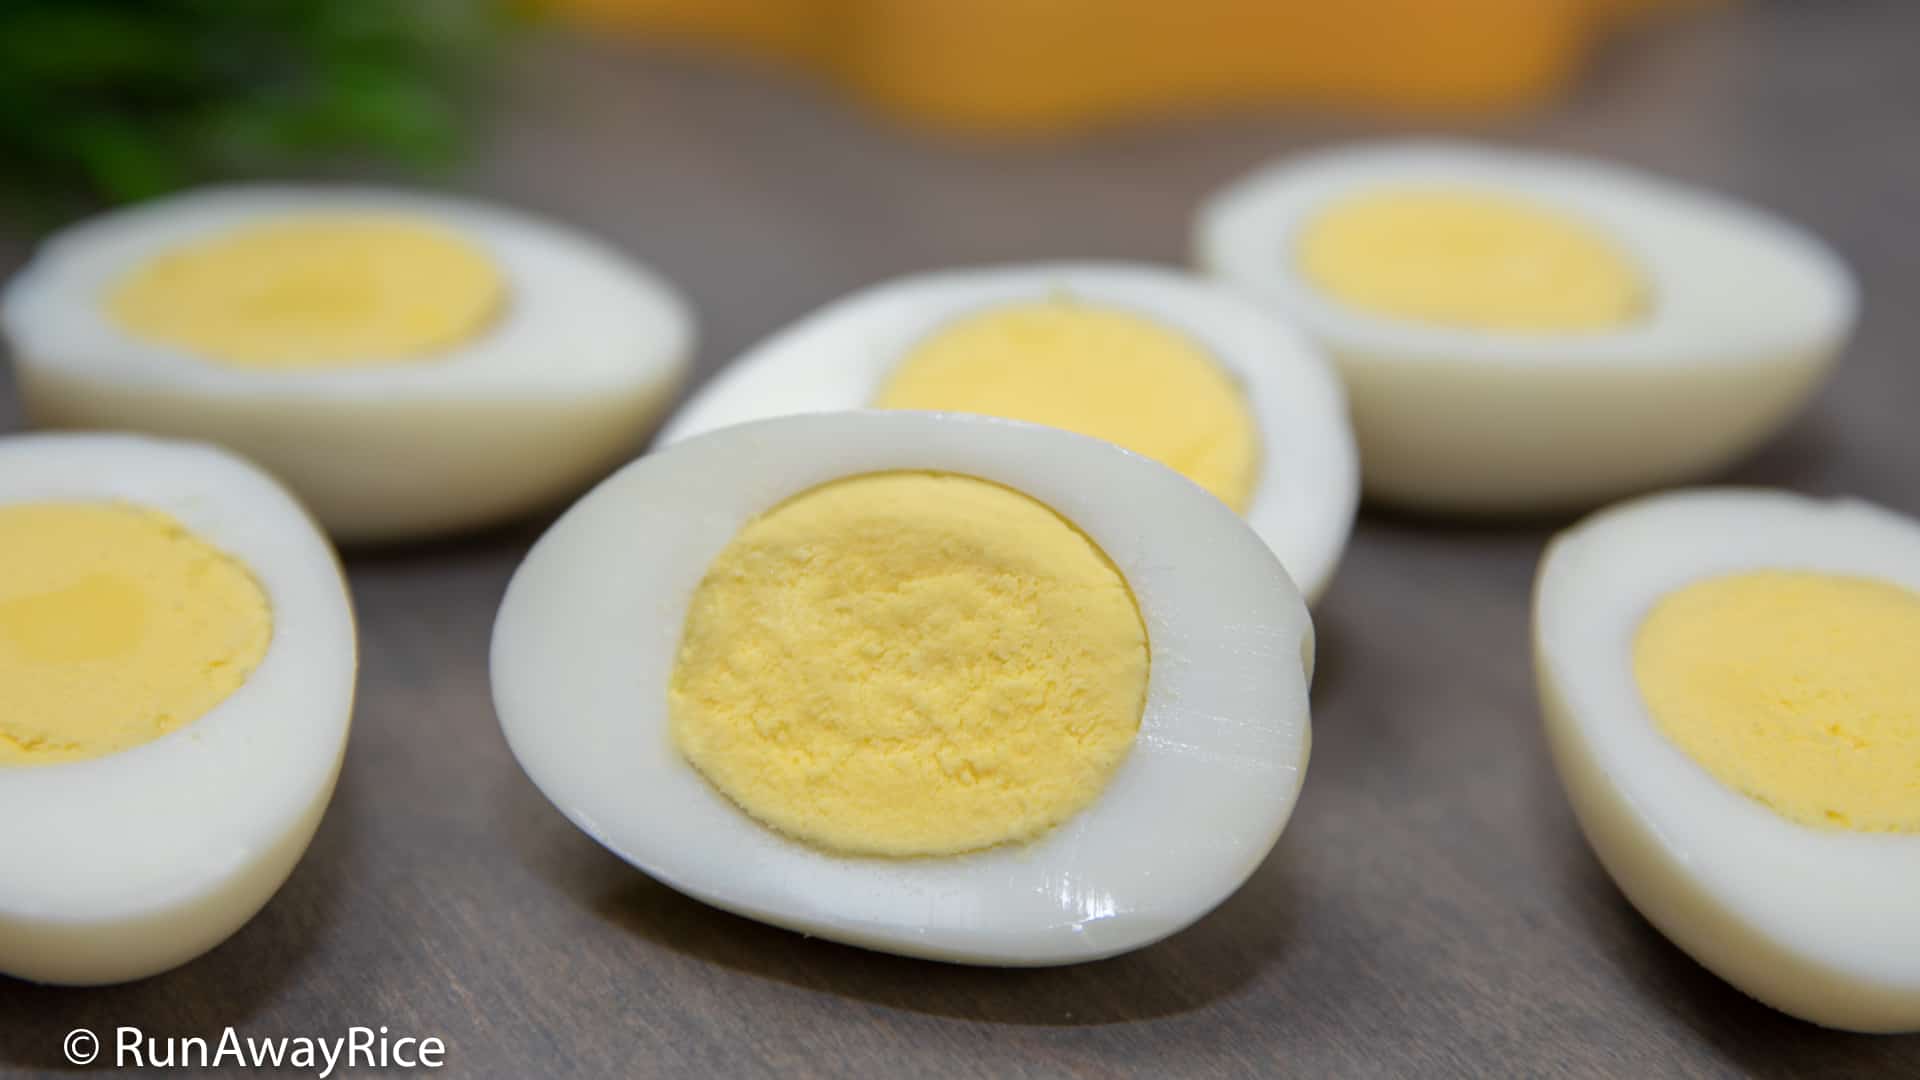 http://runawayrice.com/wp-content/uploads/2019/02/Instant-Pot-Hard-Boiled-Eggs-Recipe-Card.jpg